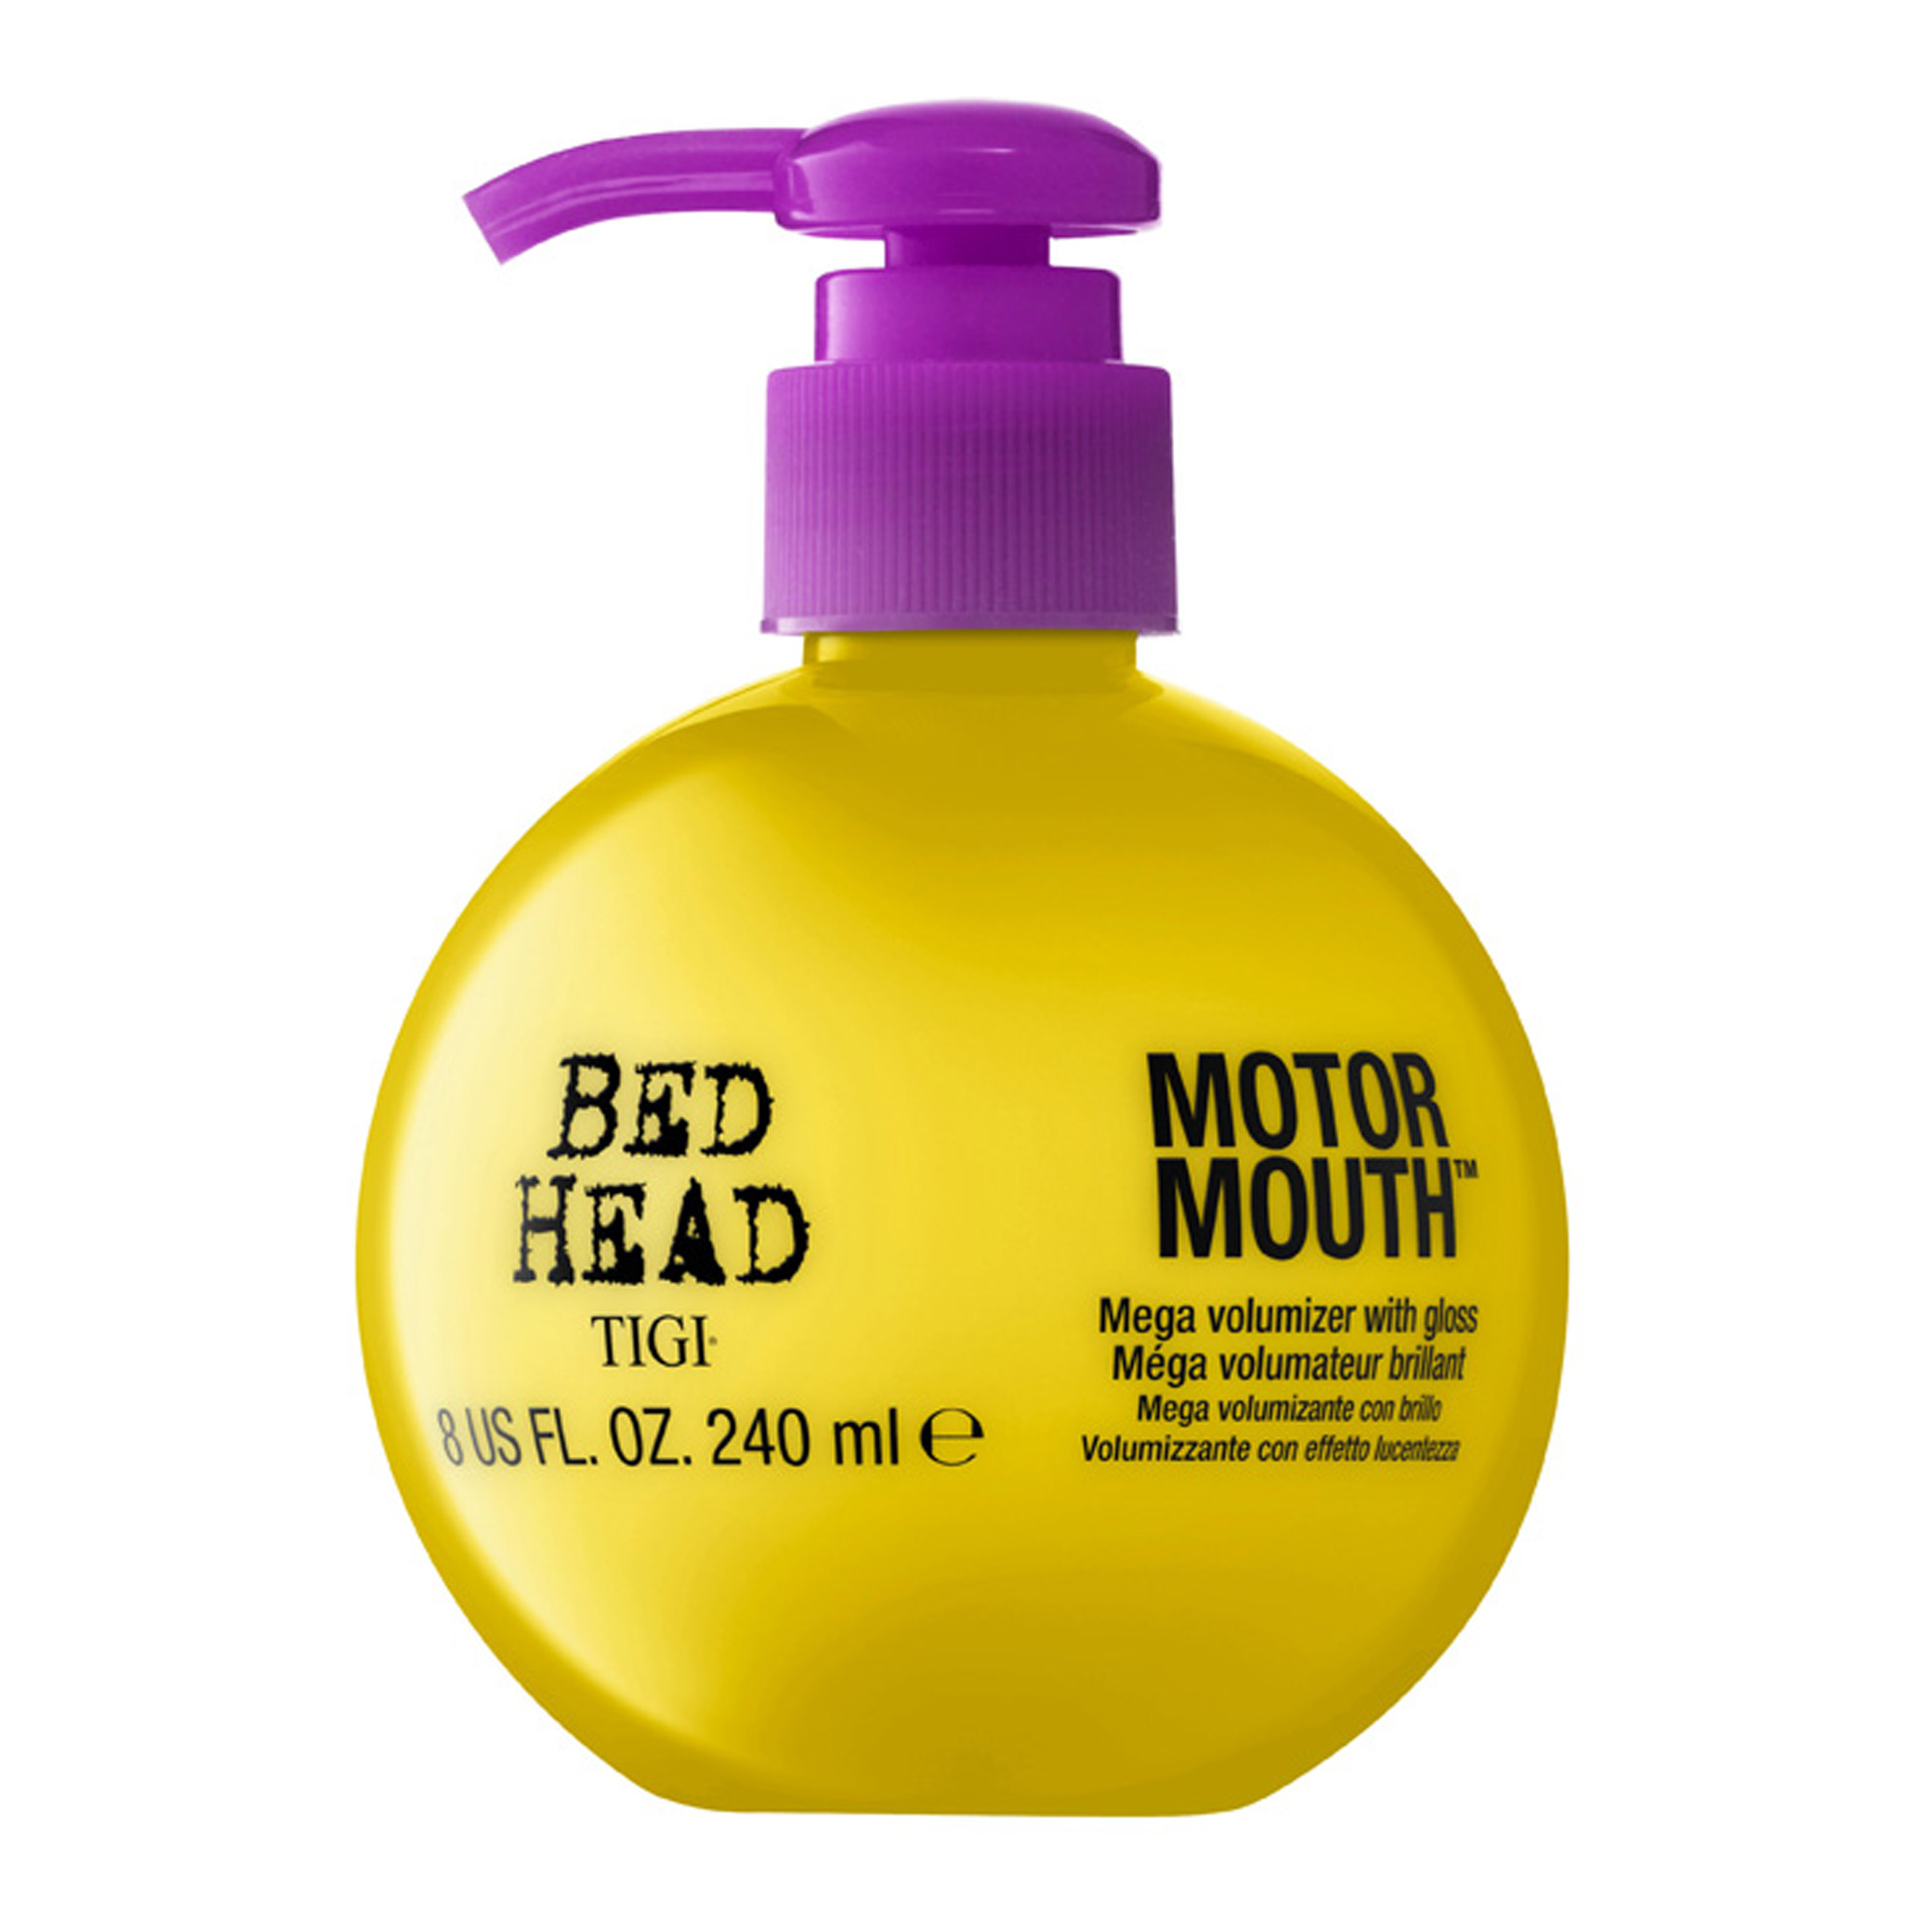 TIGI - Bed Head Motor Mouth Volume Cream 240 ml